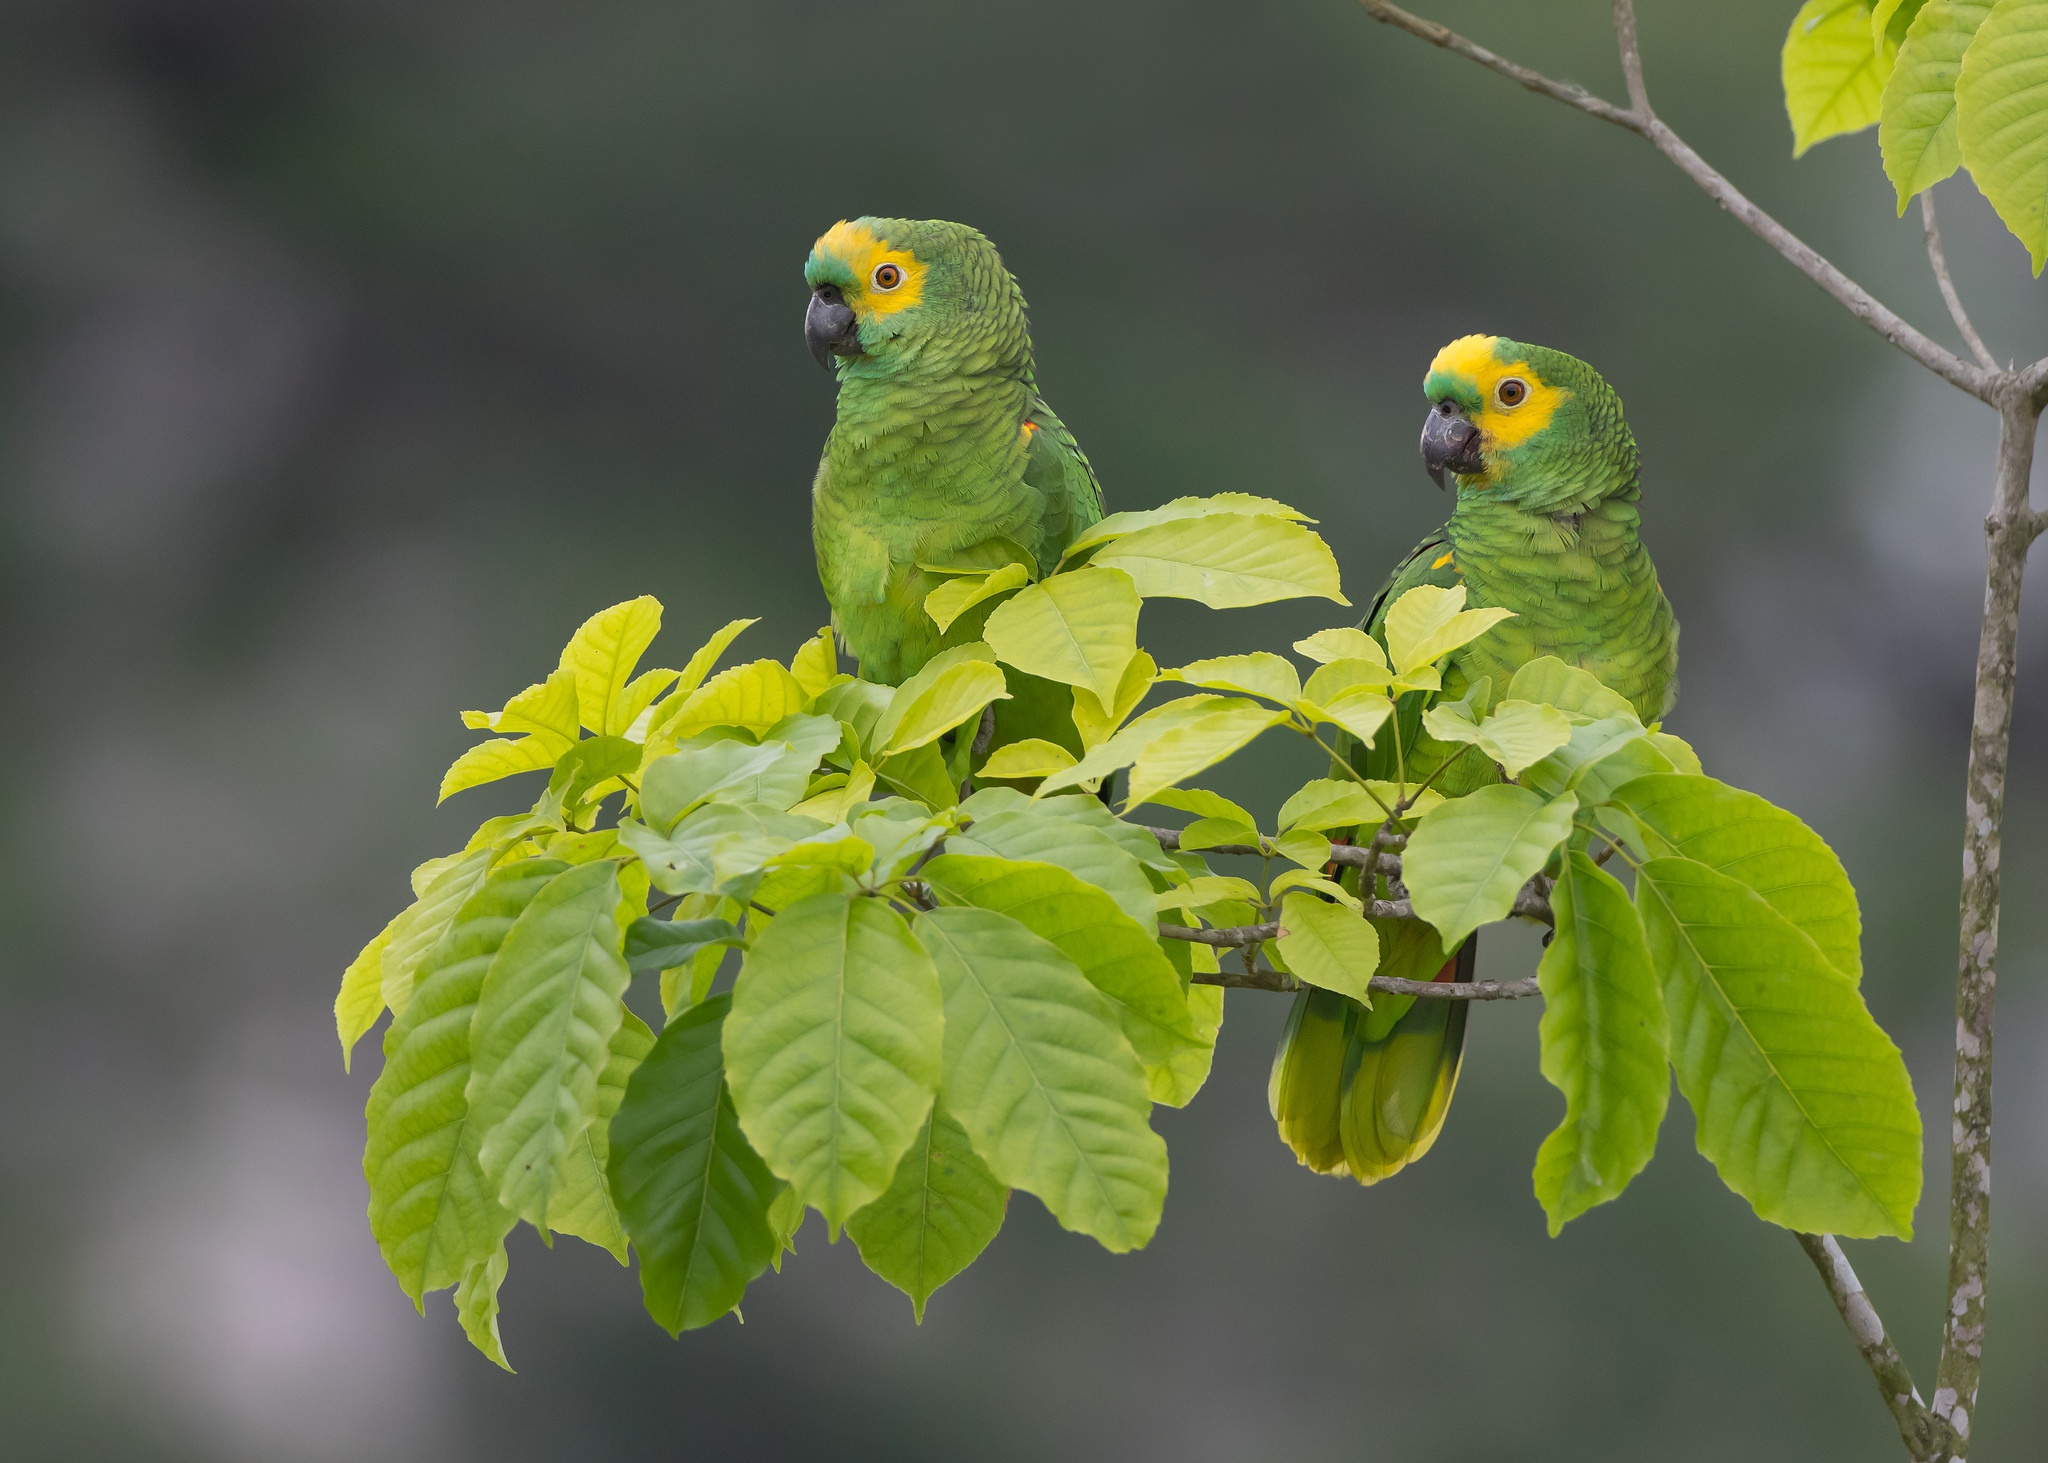 Turquoise-fronted Parrot (amazona aestiva)